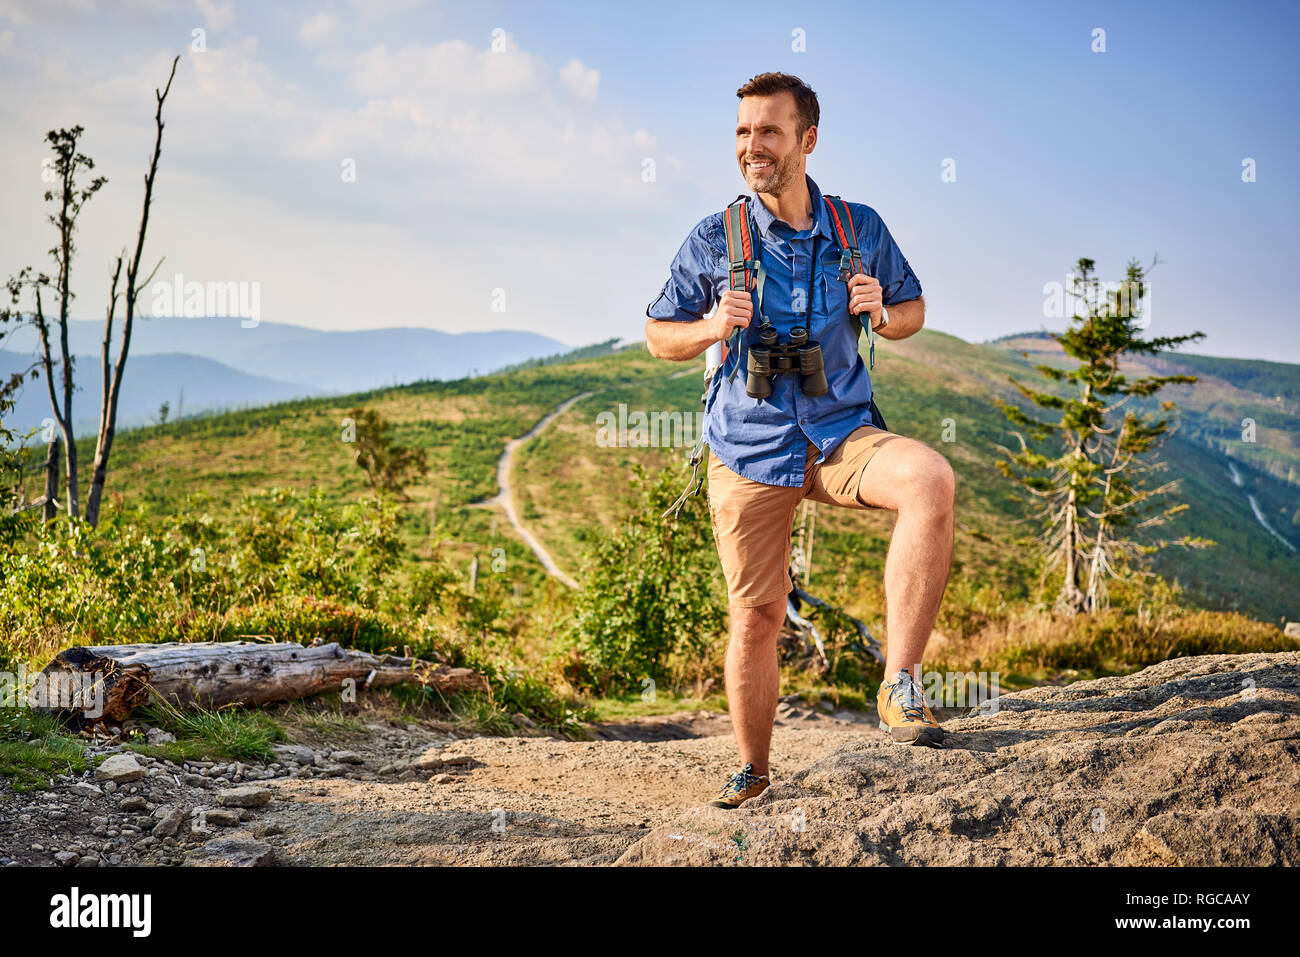 Man admiring the view during hiking trip Stock Photo